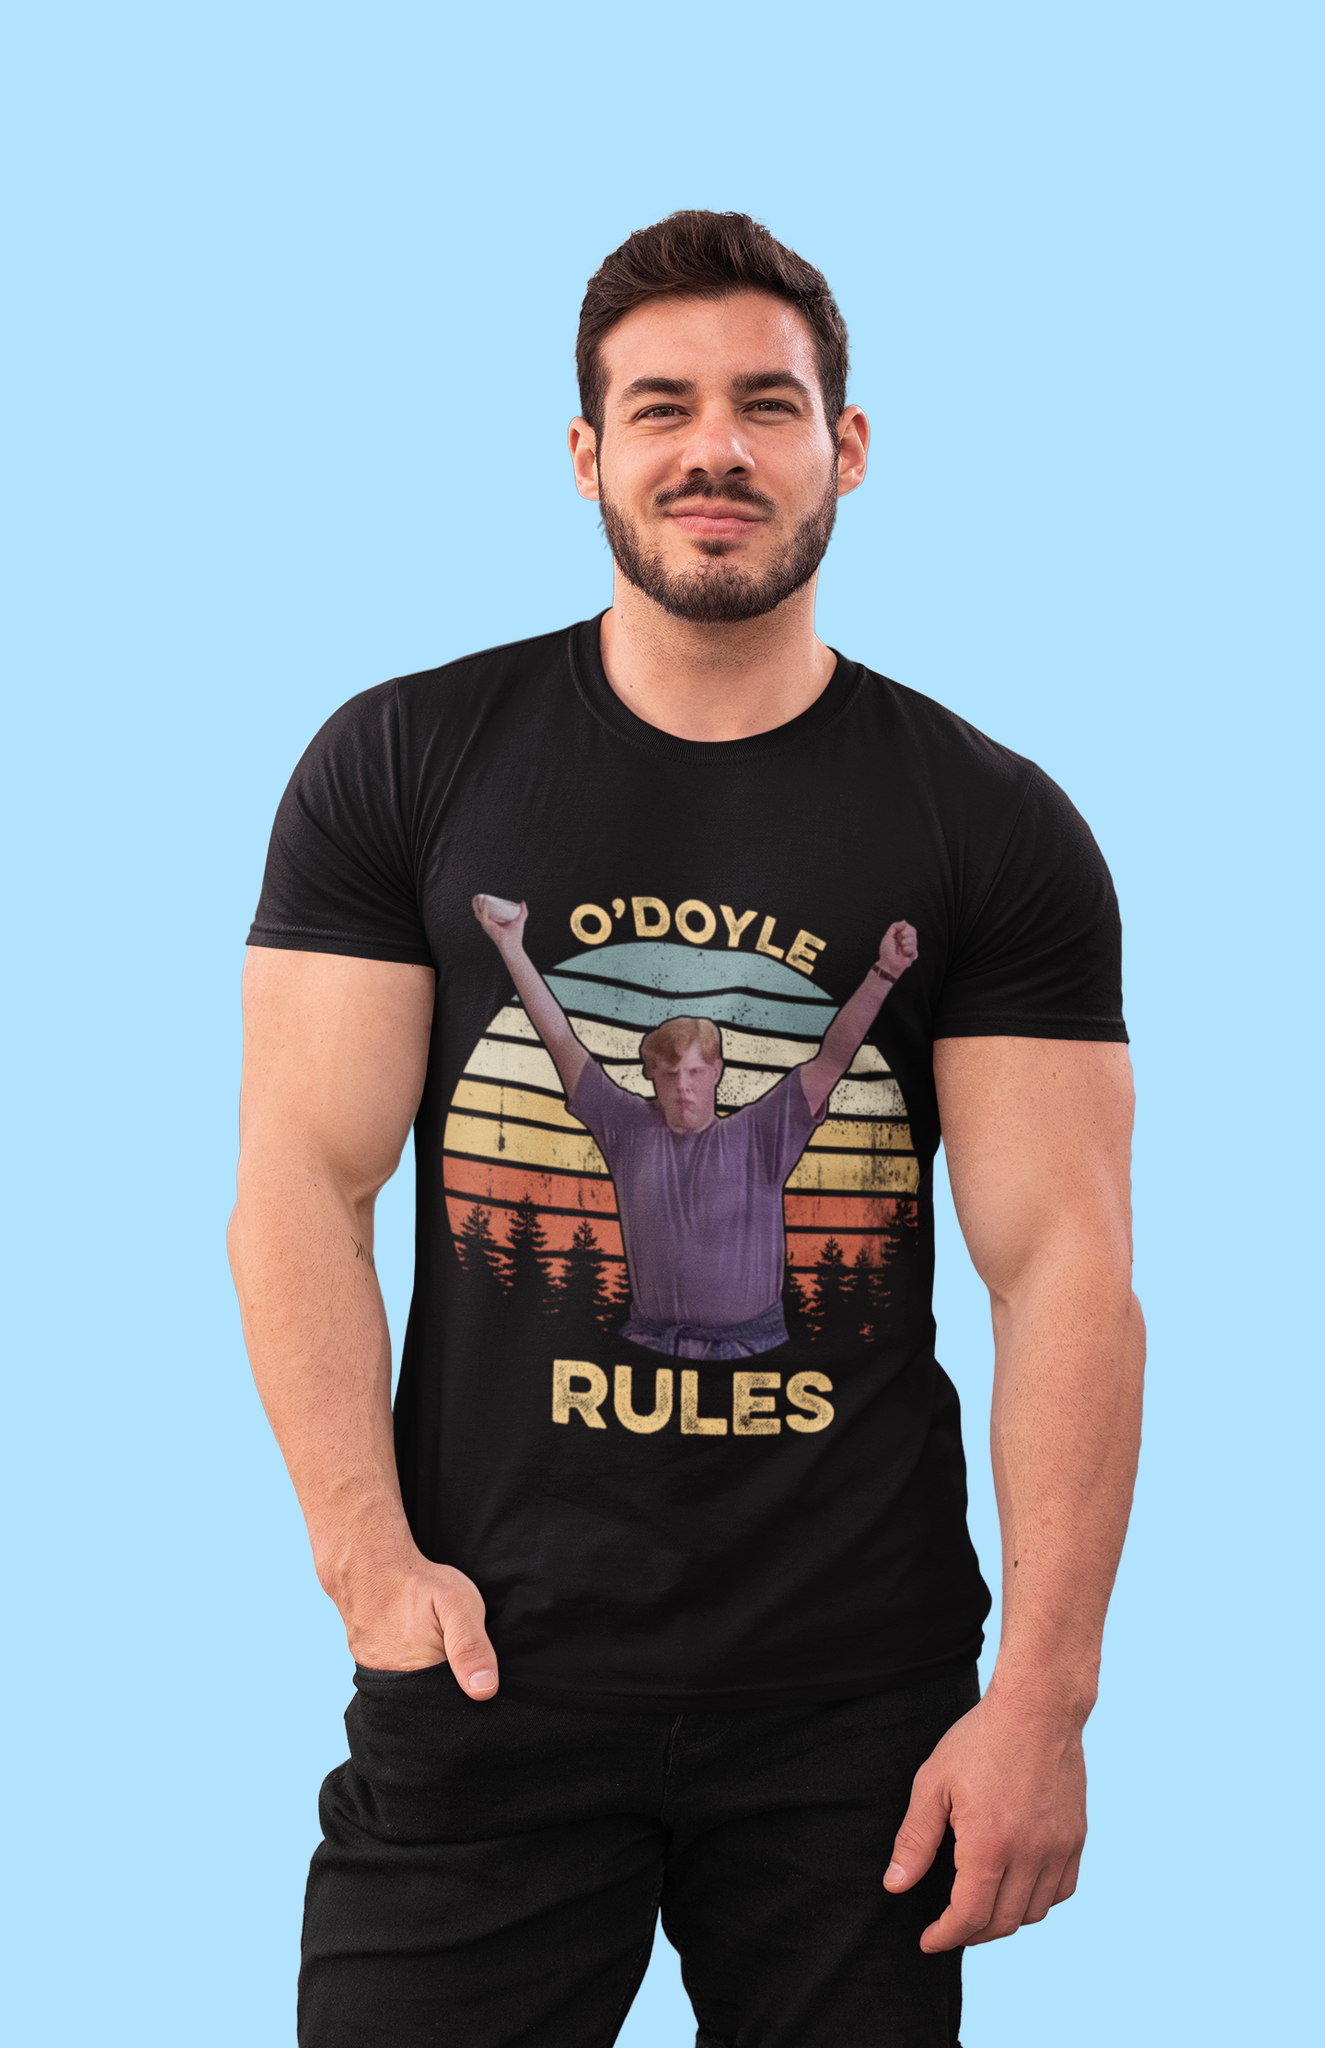 Billy Madison Comedy Film T Shirt, ODoyle Grade 12 T Shirt, Odoyle Rules Tshirt